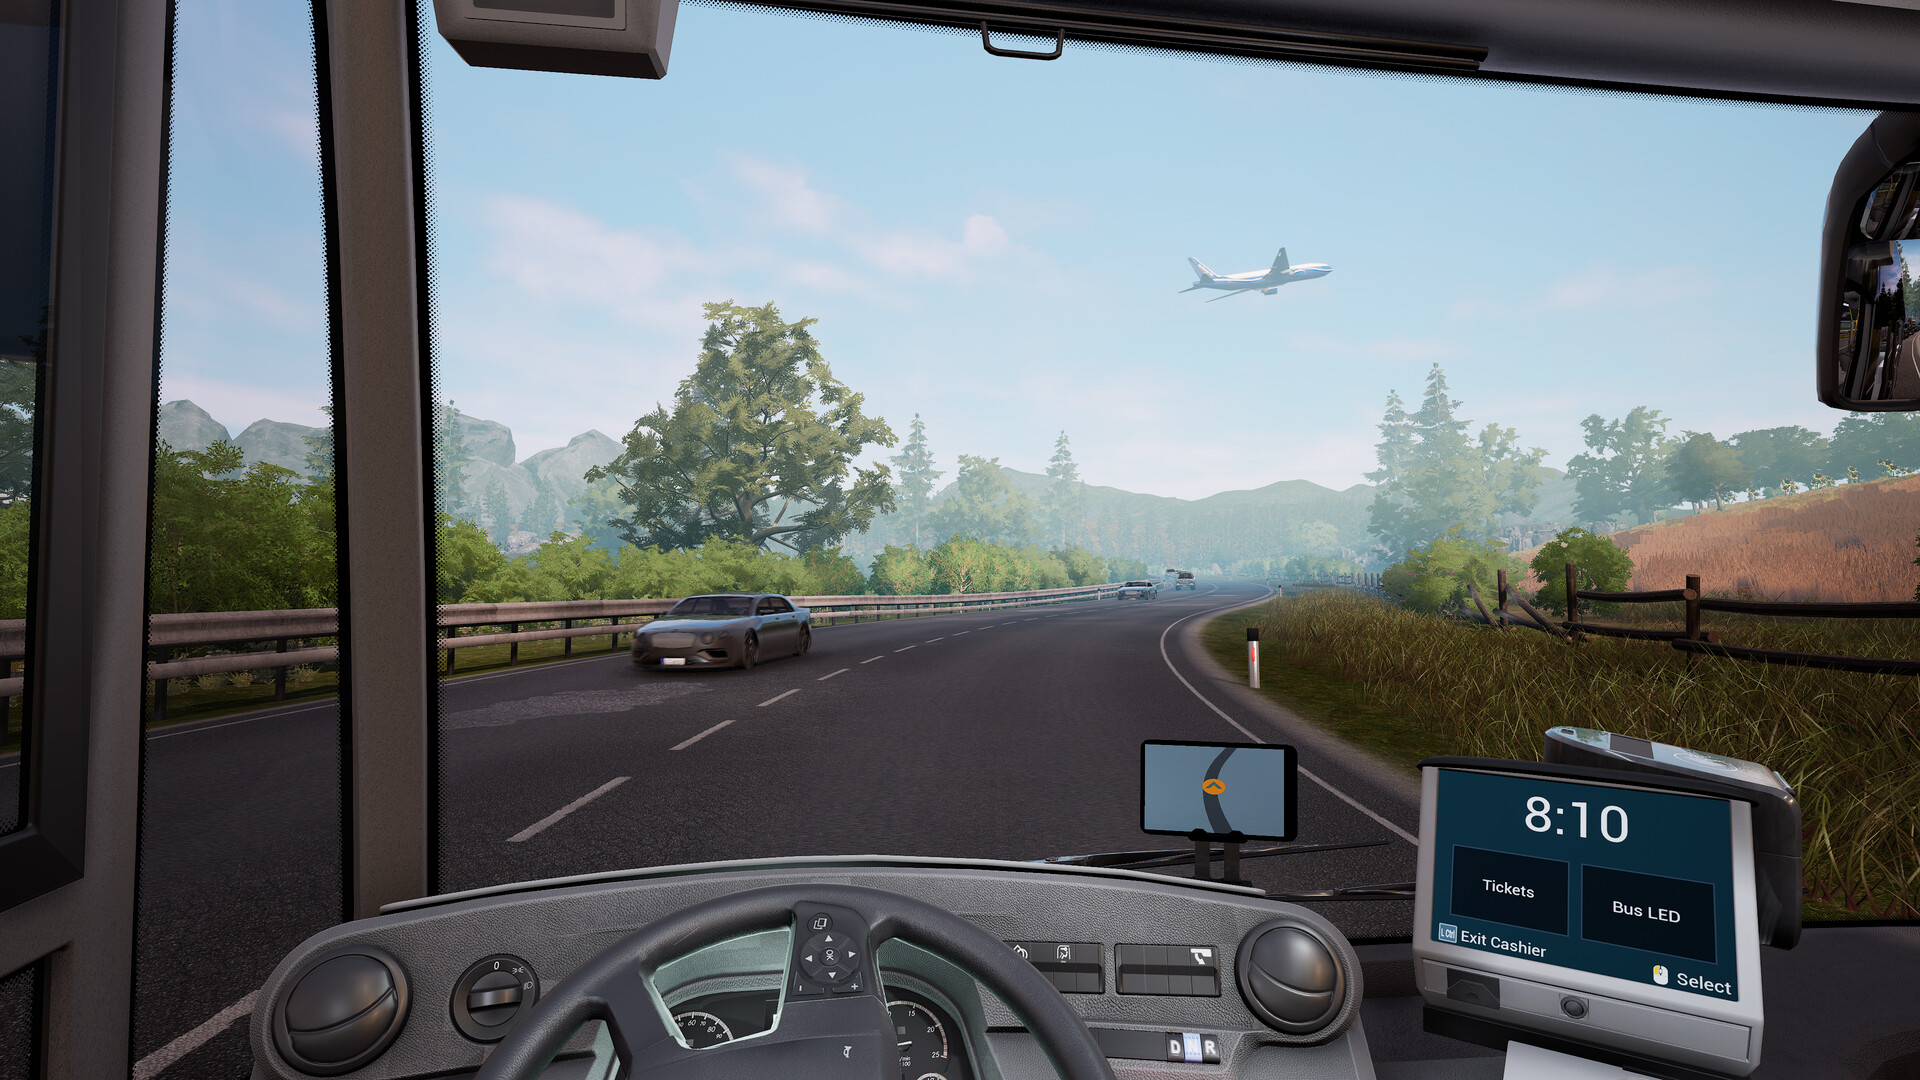 Bus Simulator 21 Next Stop – Gold Upgrade EU DLC PS4 CD Key